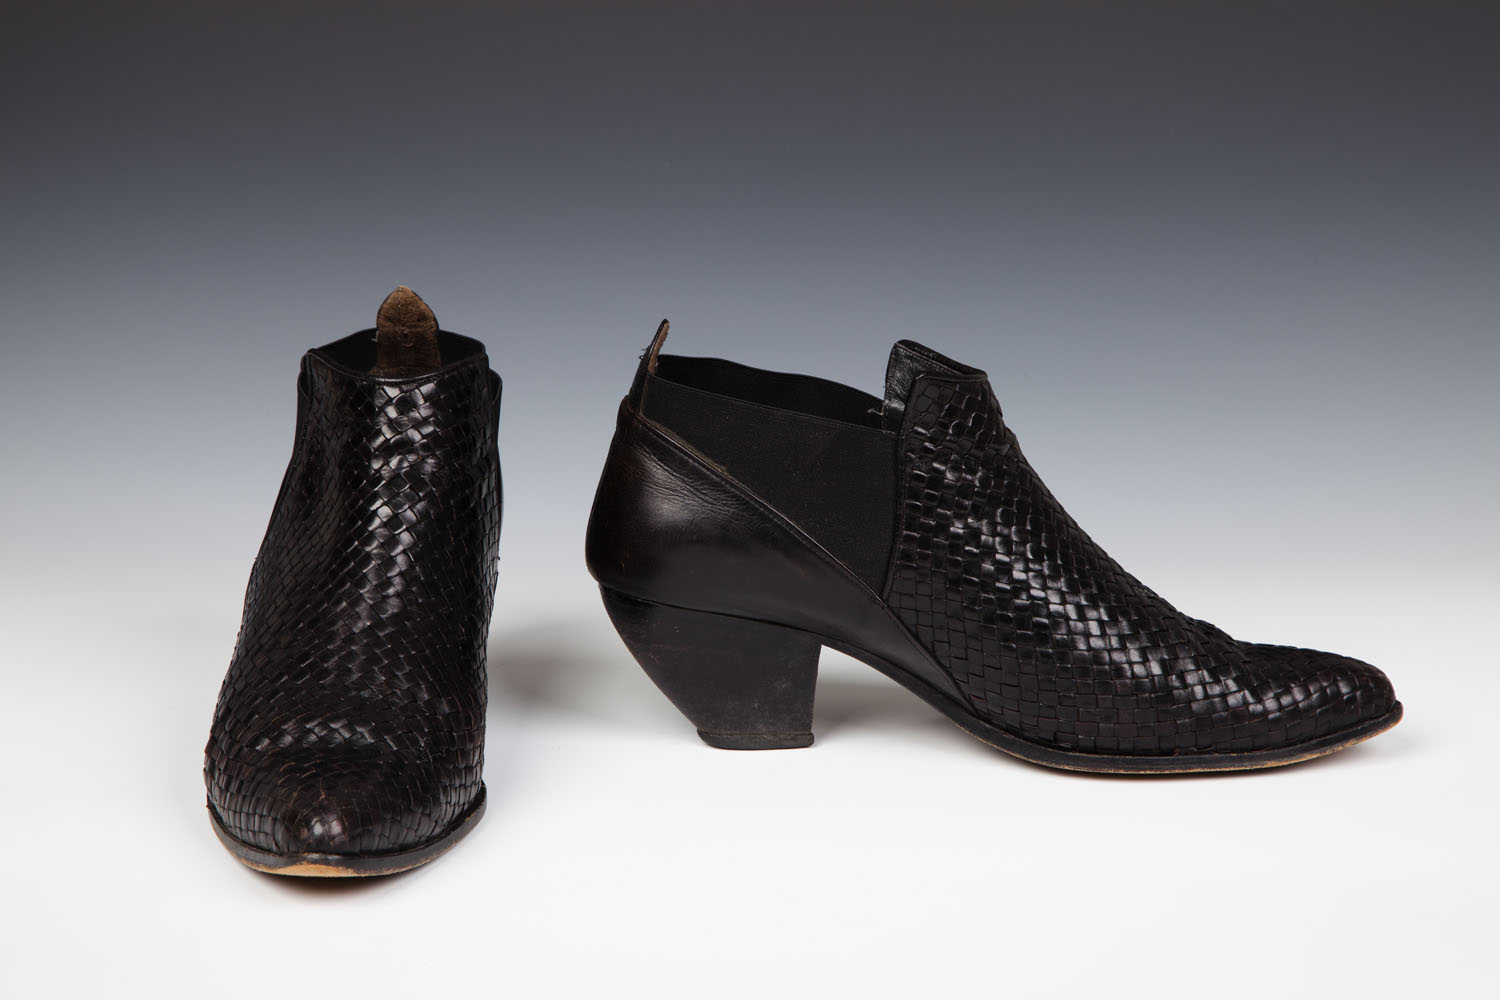 Black half boots